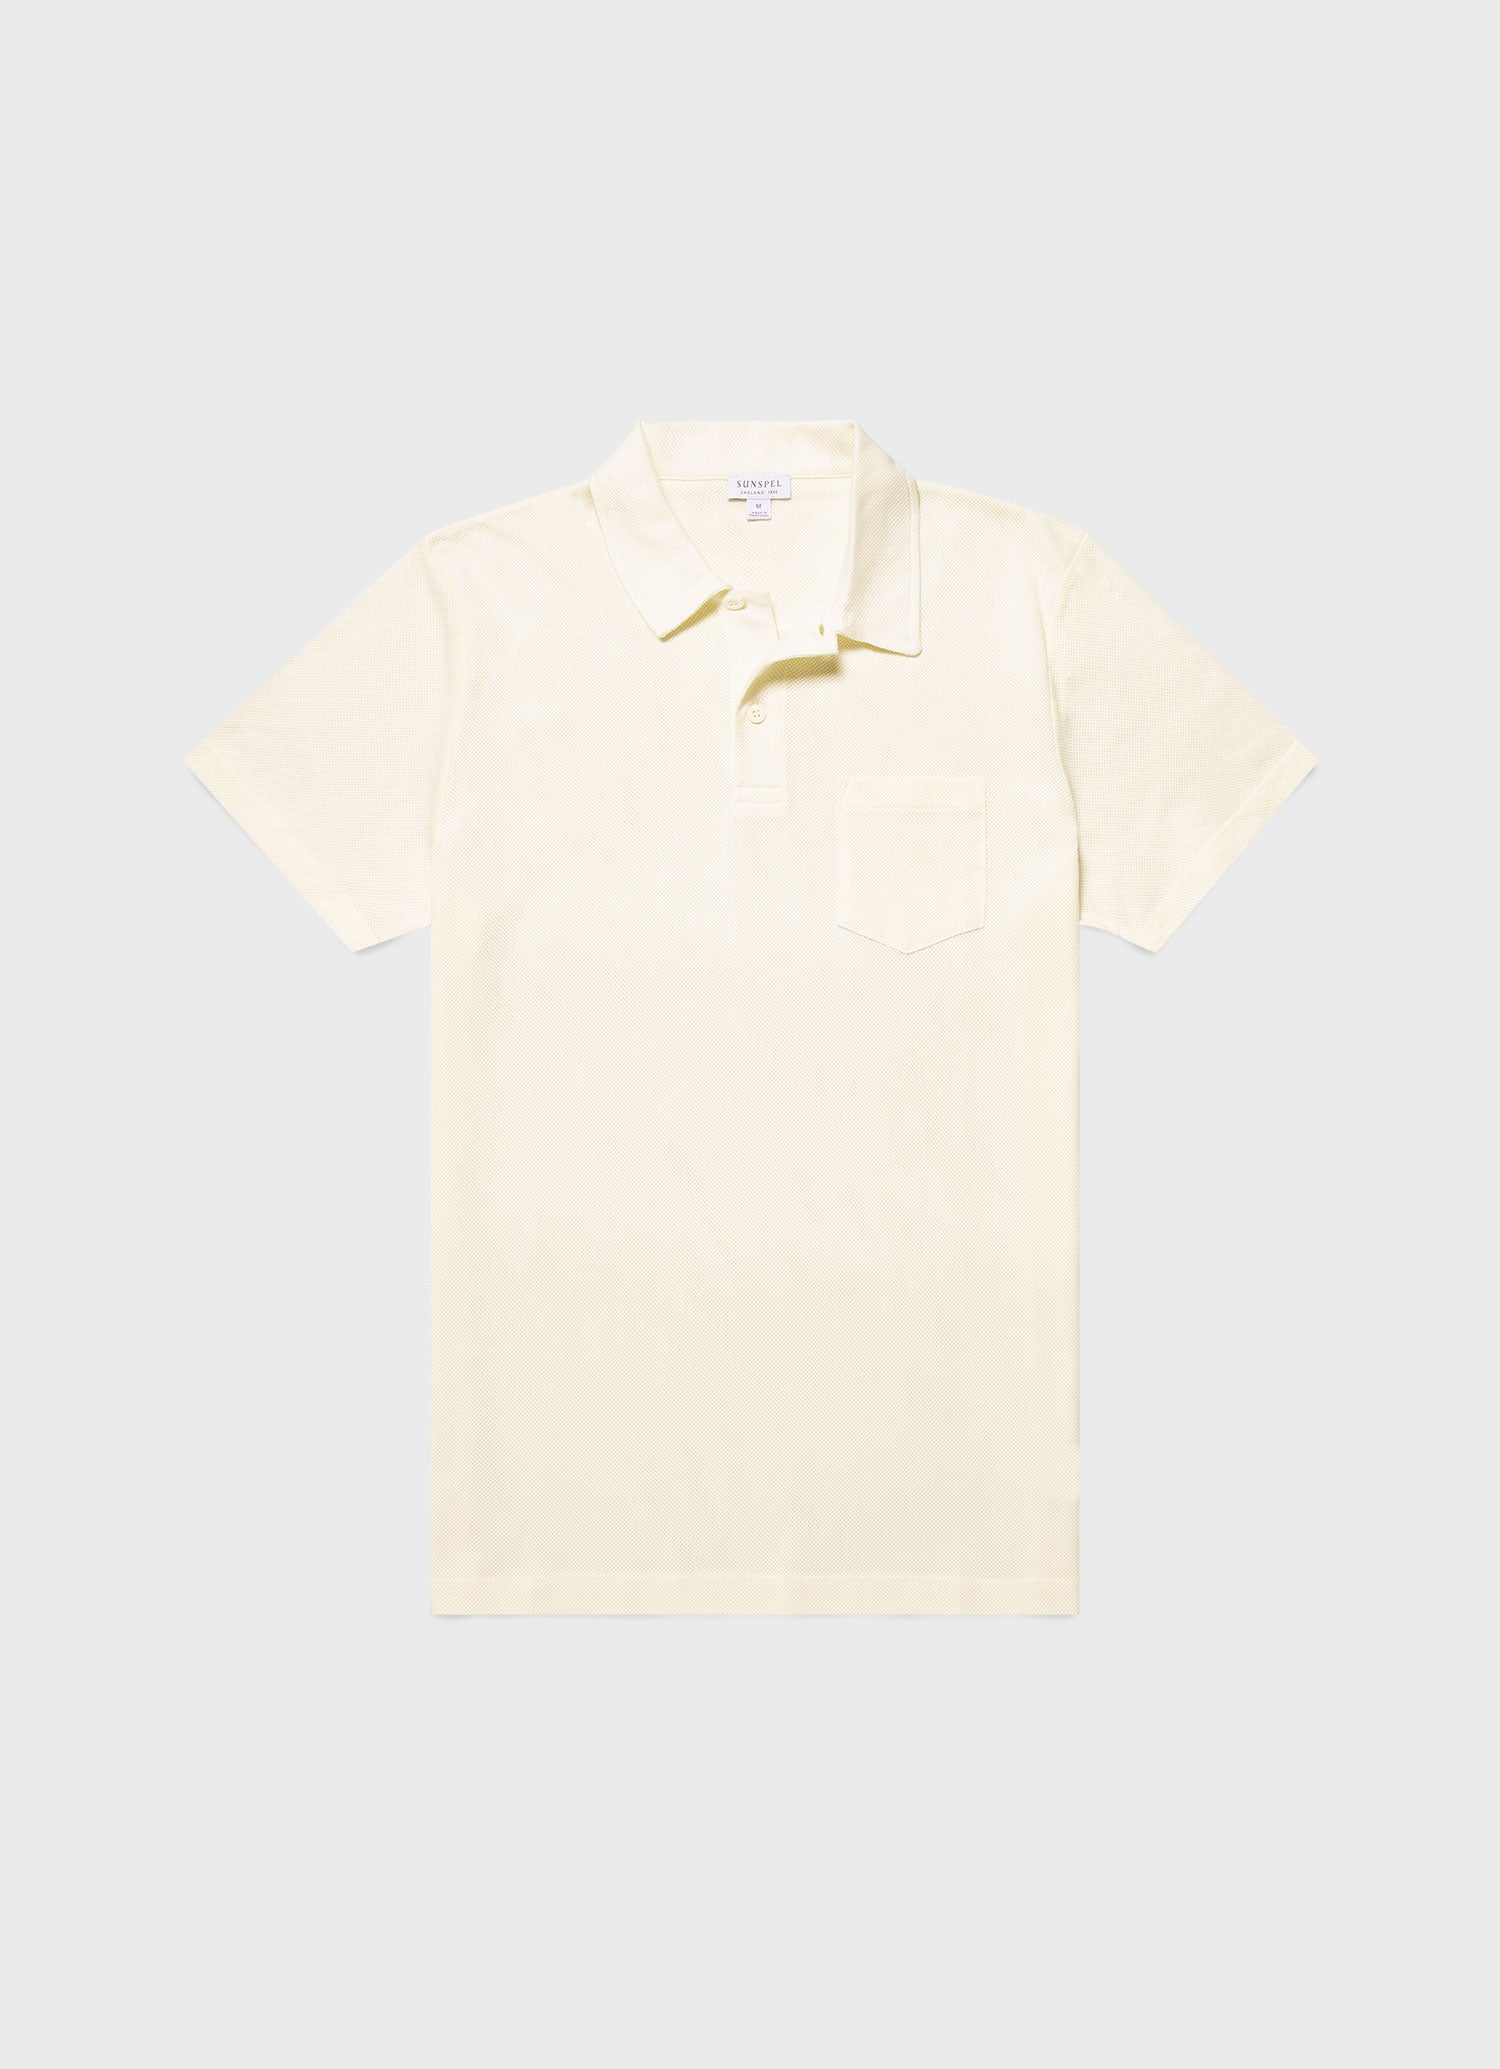 Men's Riviera Polo Shirt in Archive White